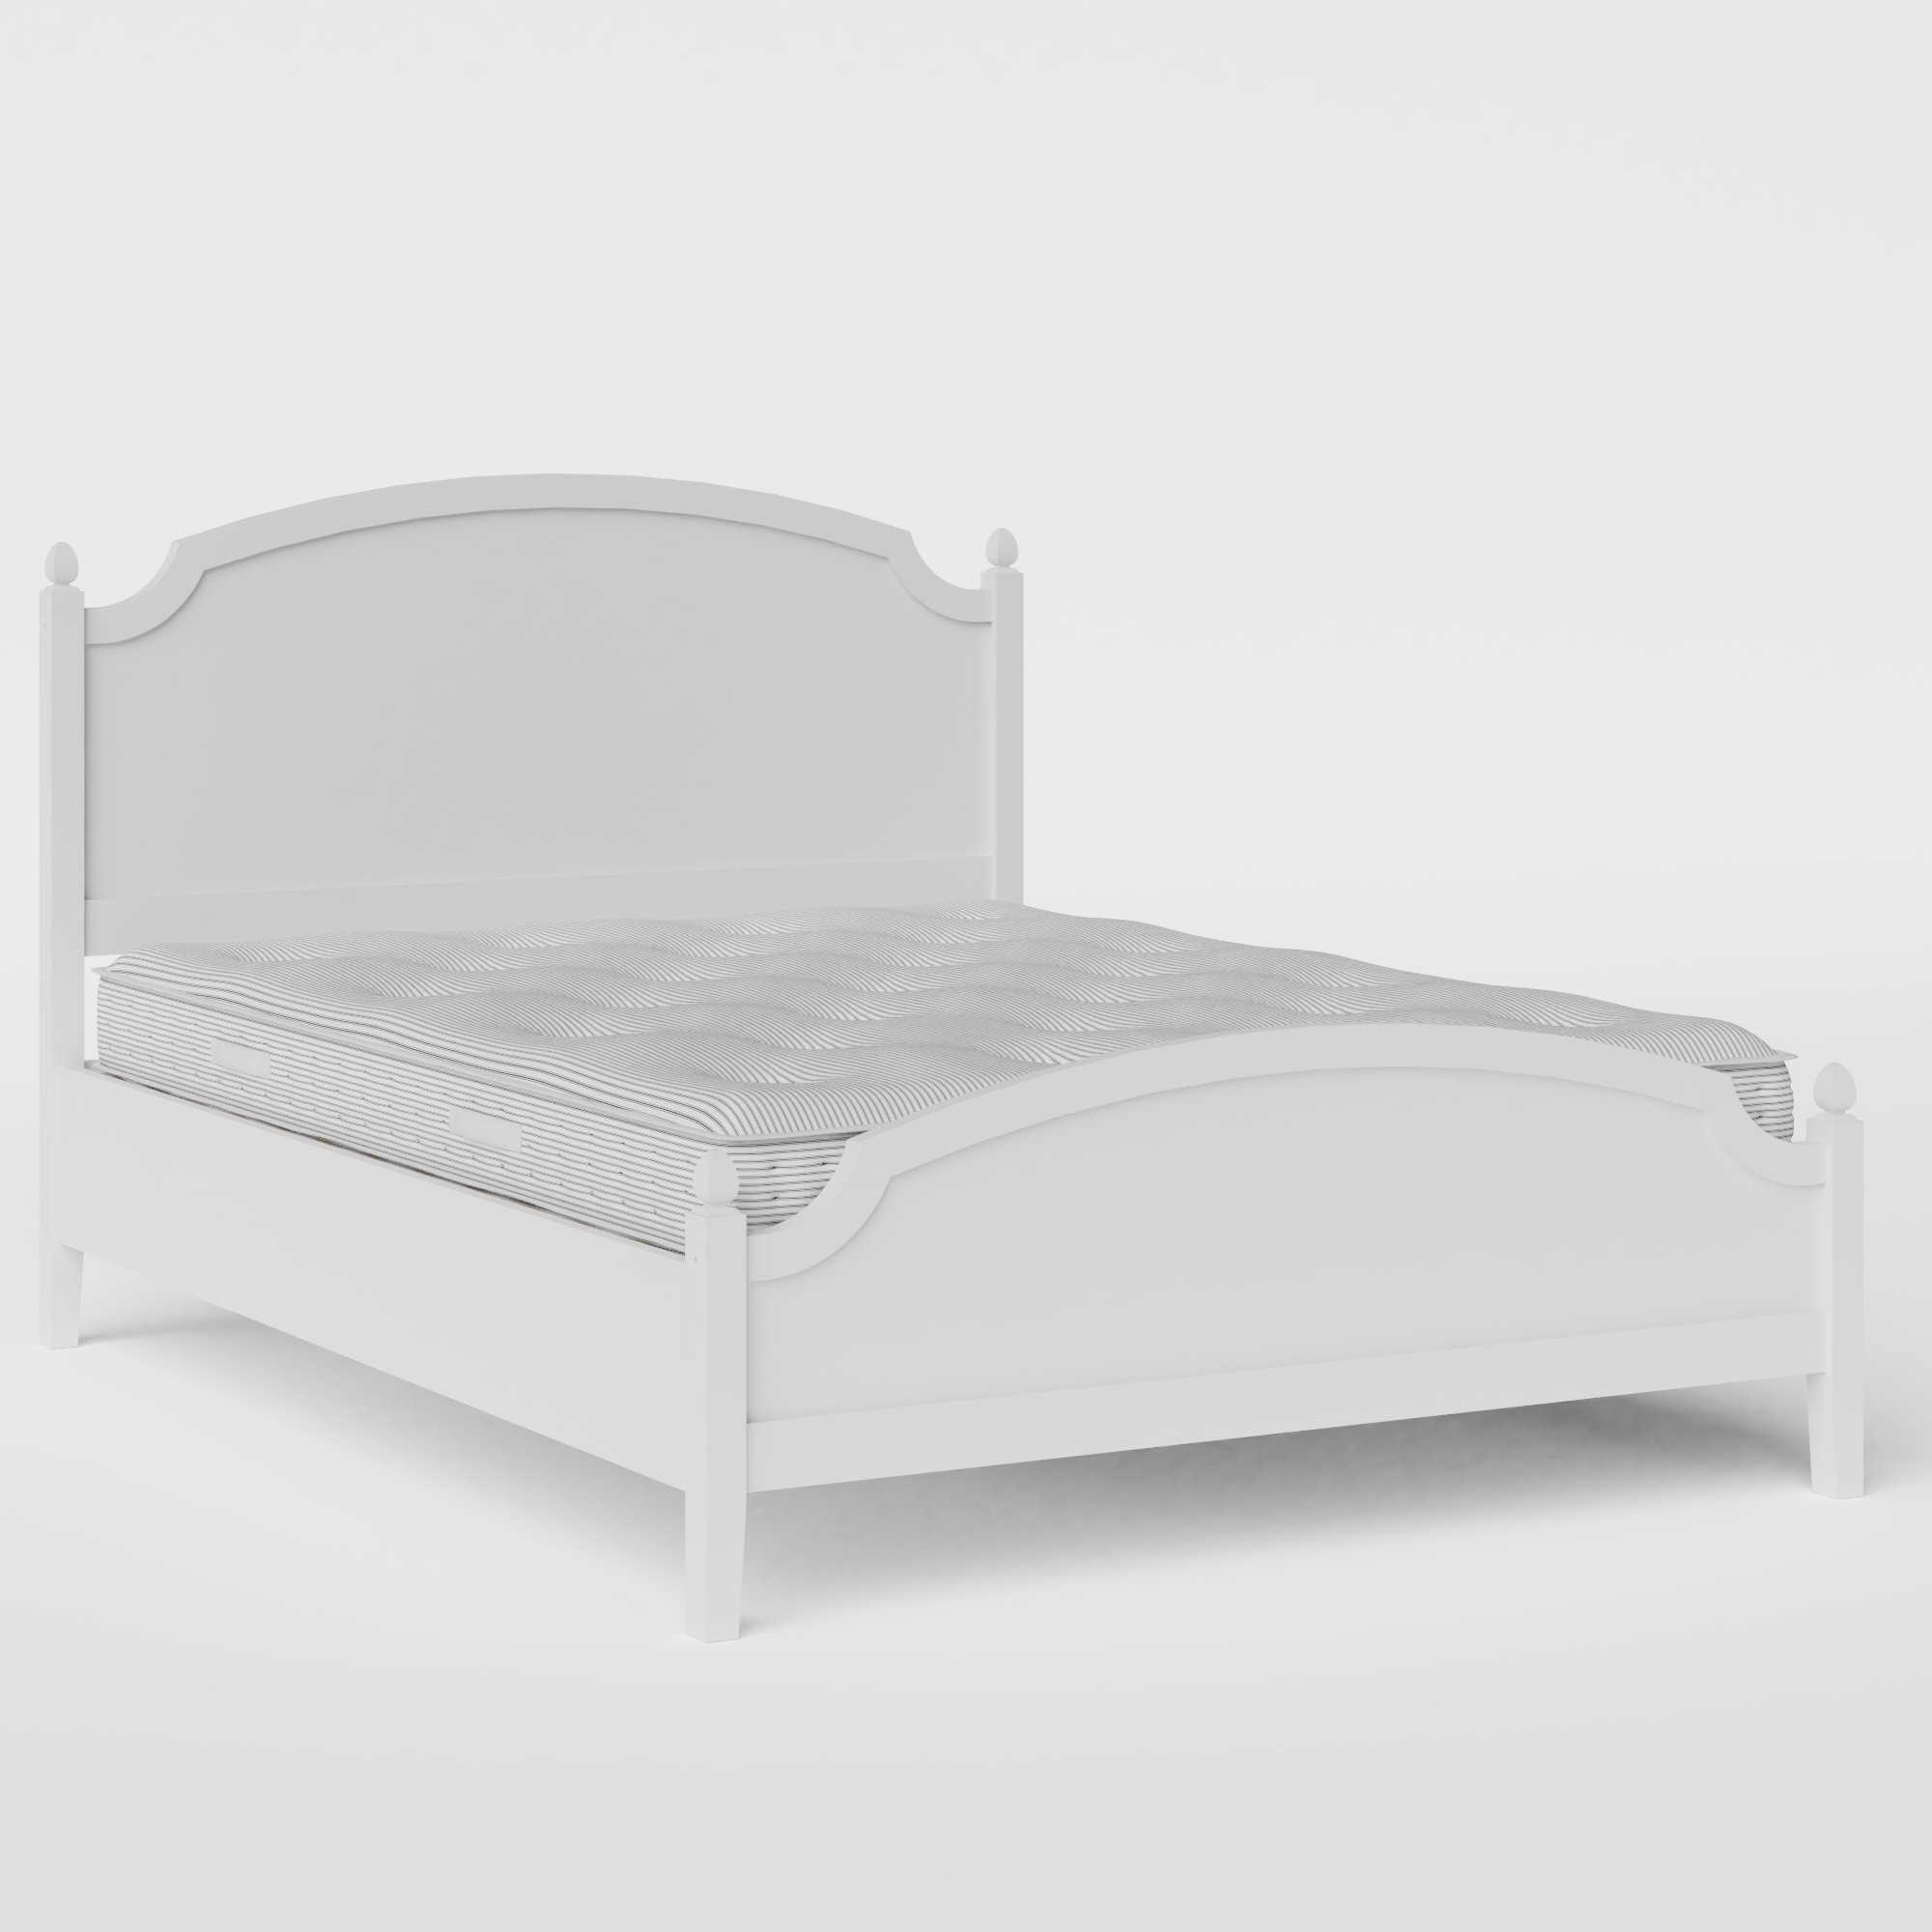 Kipling Low Footend Painted lit en bois peint en blanc avec matelas